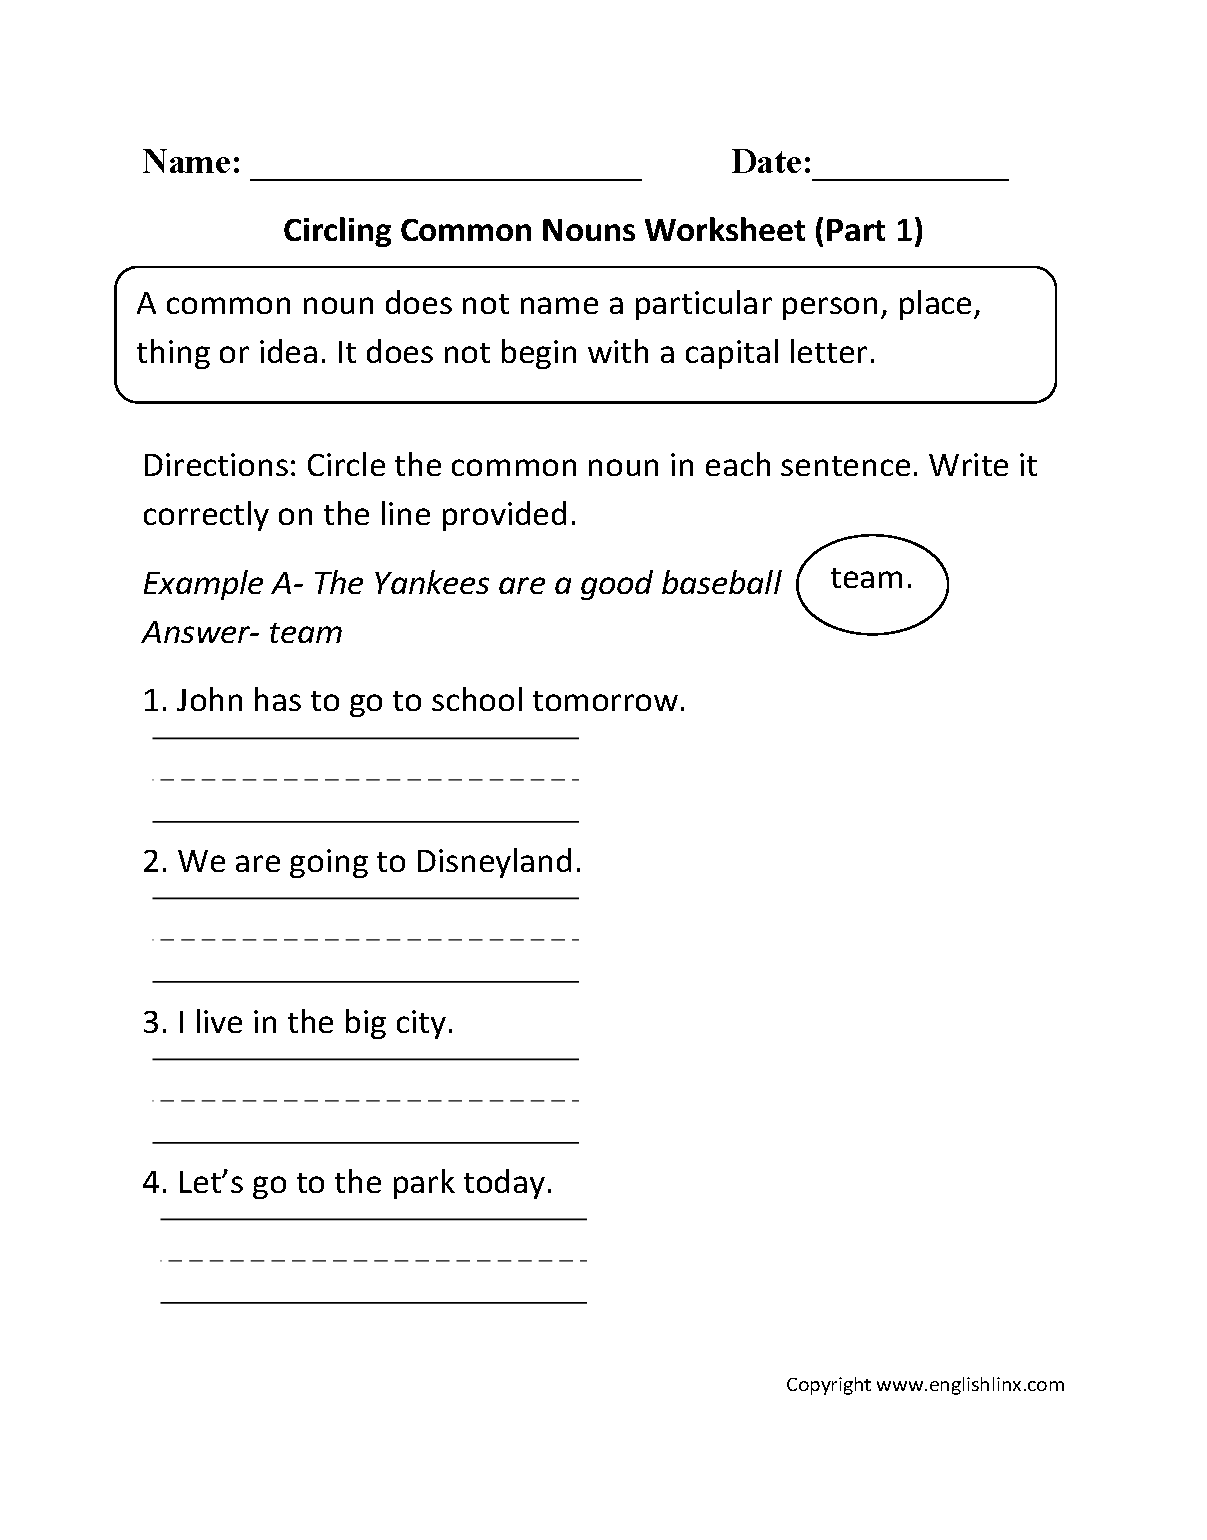 Circling Common Nouns Worksheet Part 1